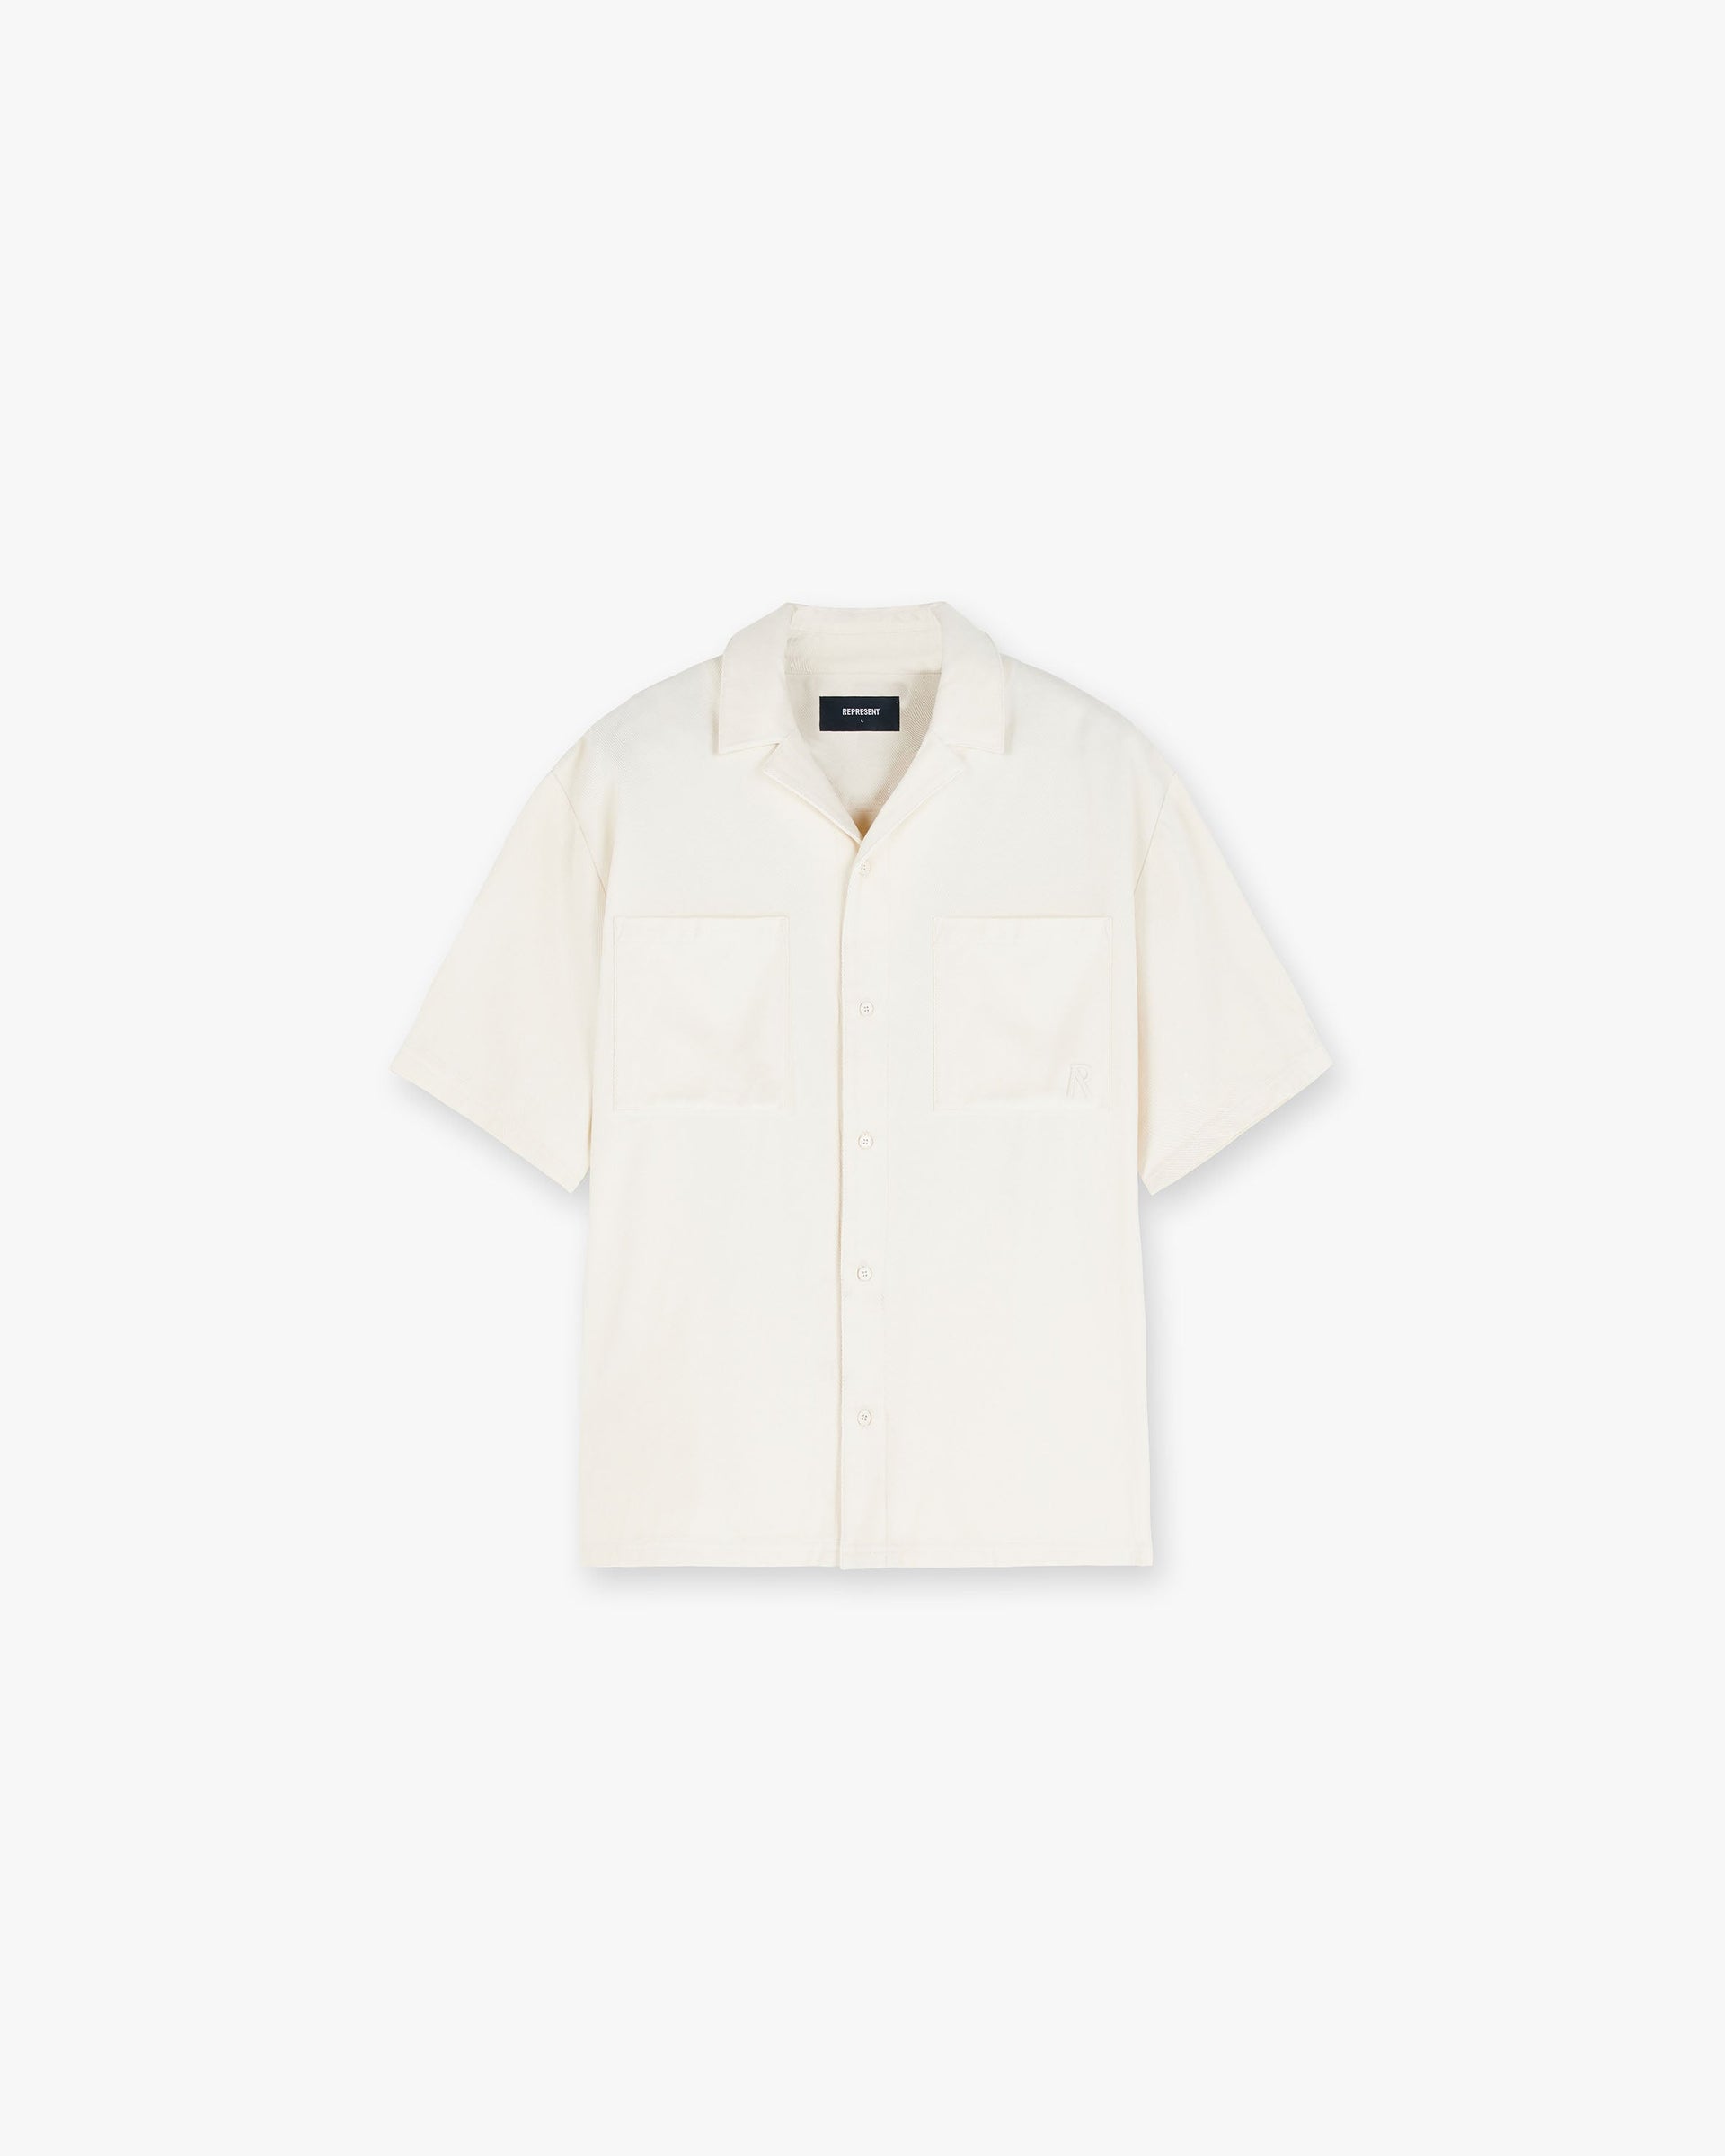 Yacht Shirt | Cream Shirts SC23 | Represent Clo